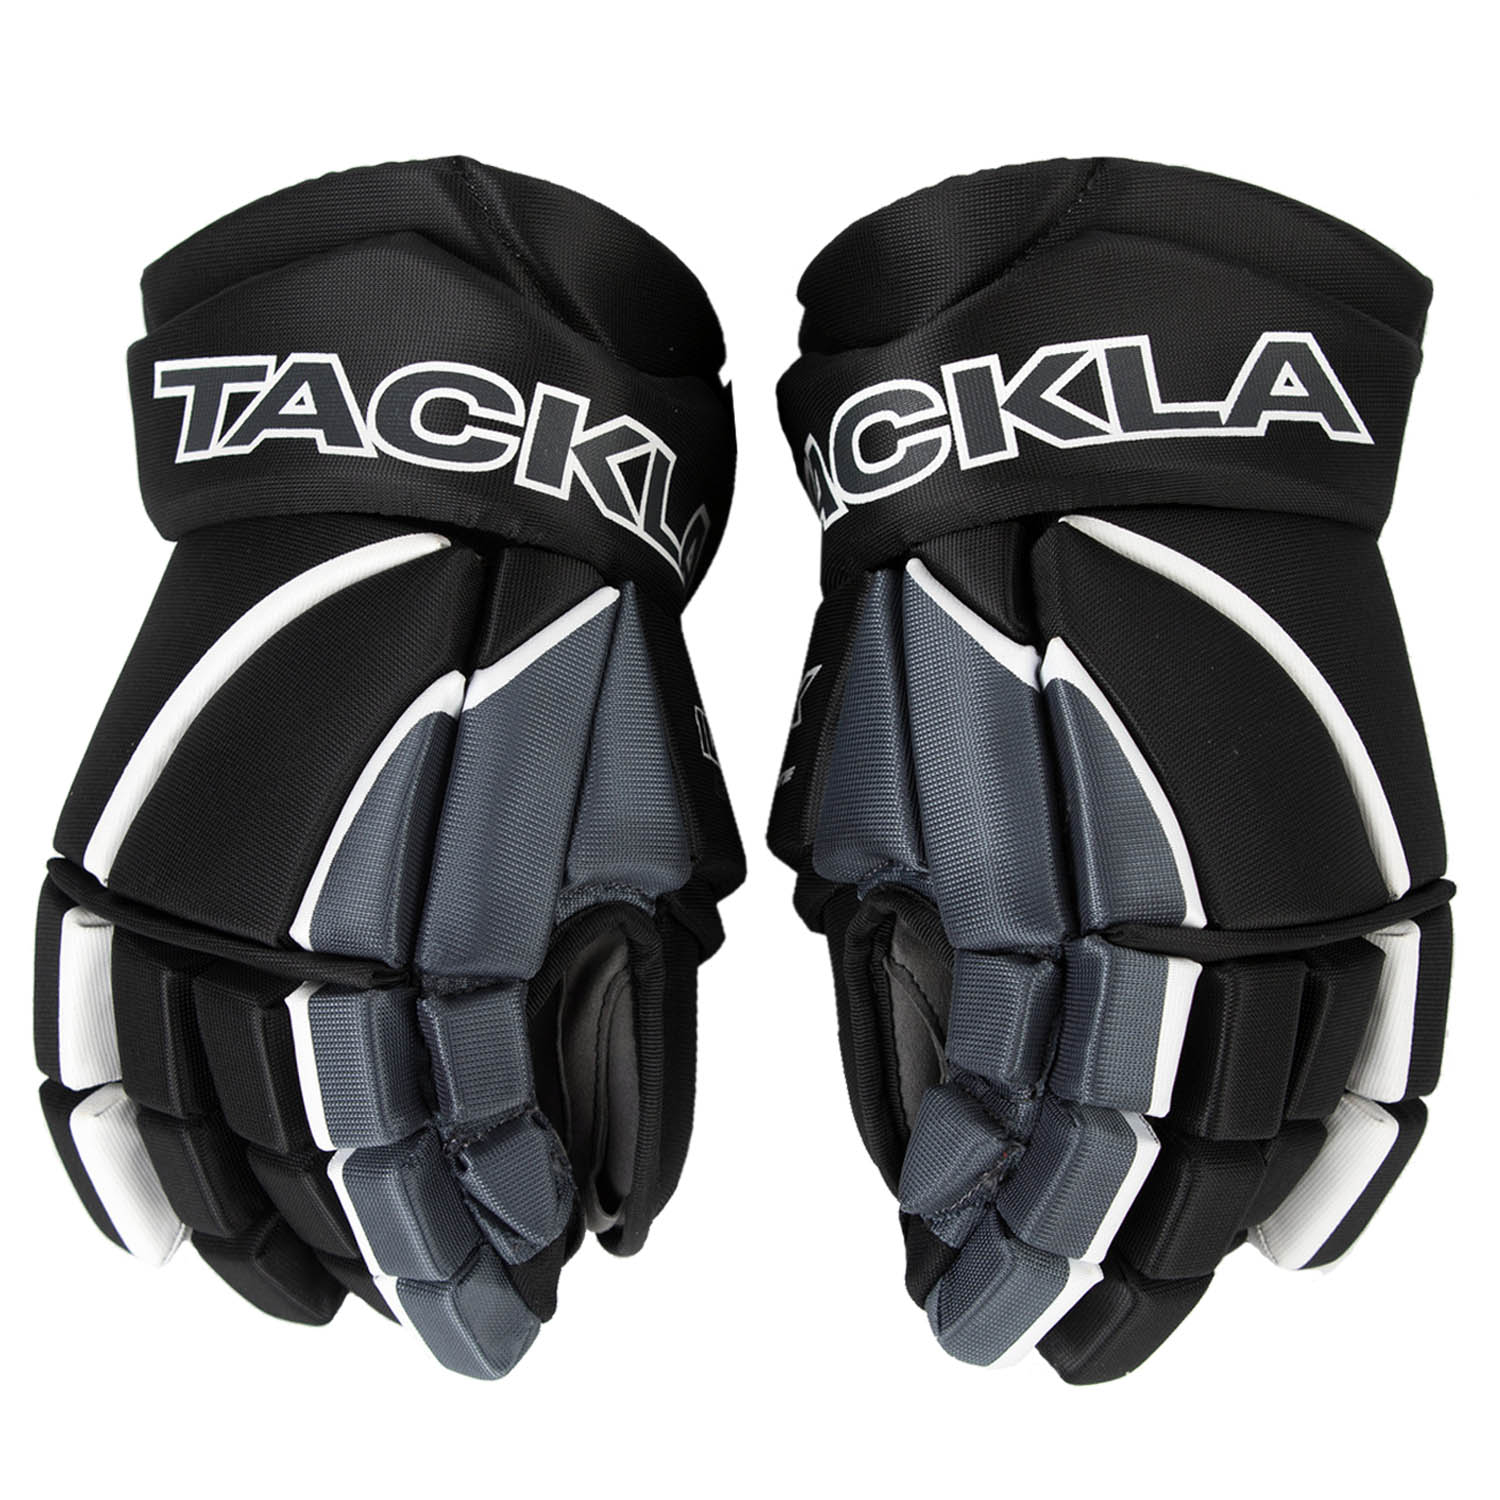 Tackla 1000X Game Zone Ice Hockey Gloves Jr